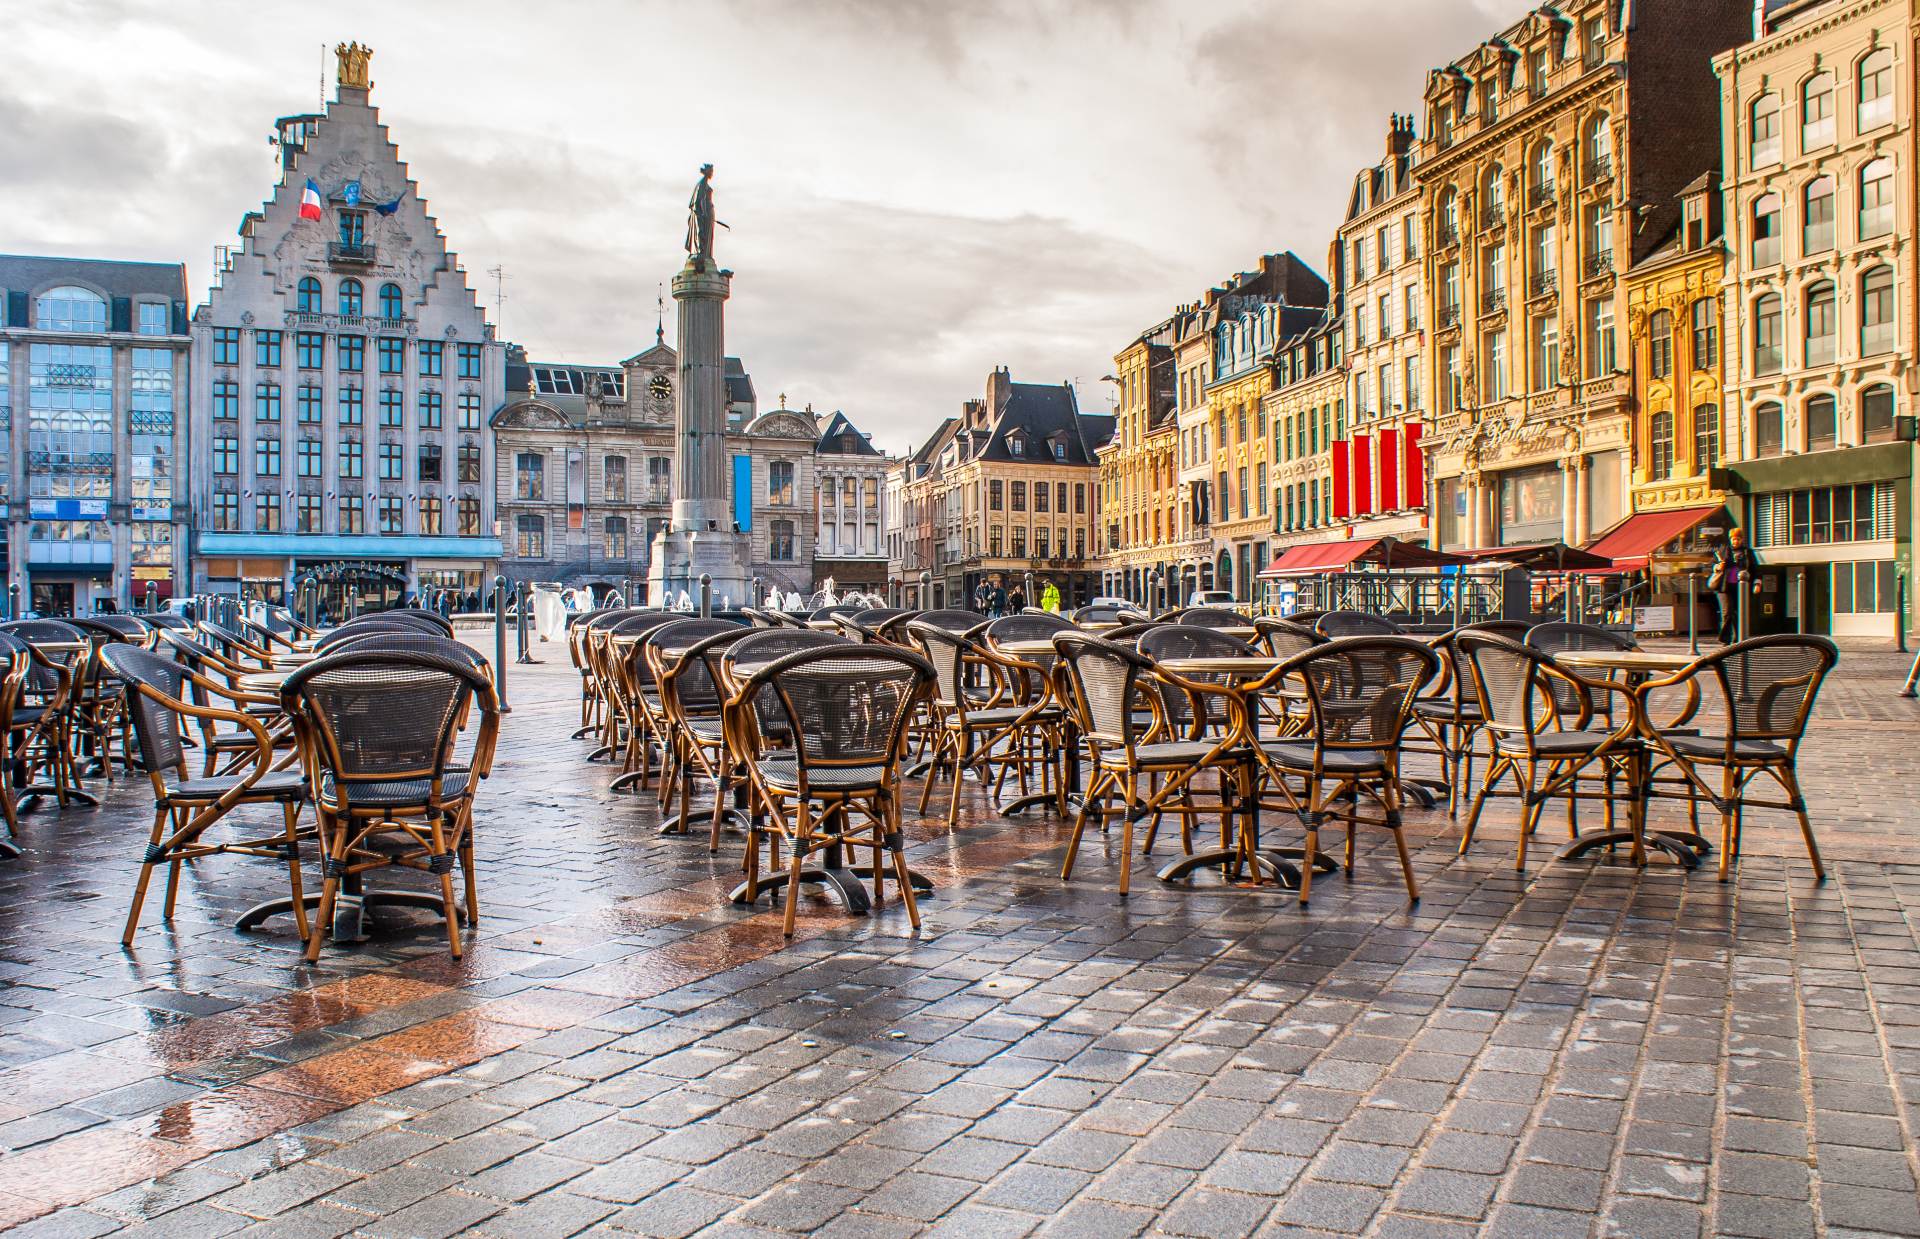 Lille main square (Image: Dziorek Rafal/Shutterstock)